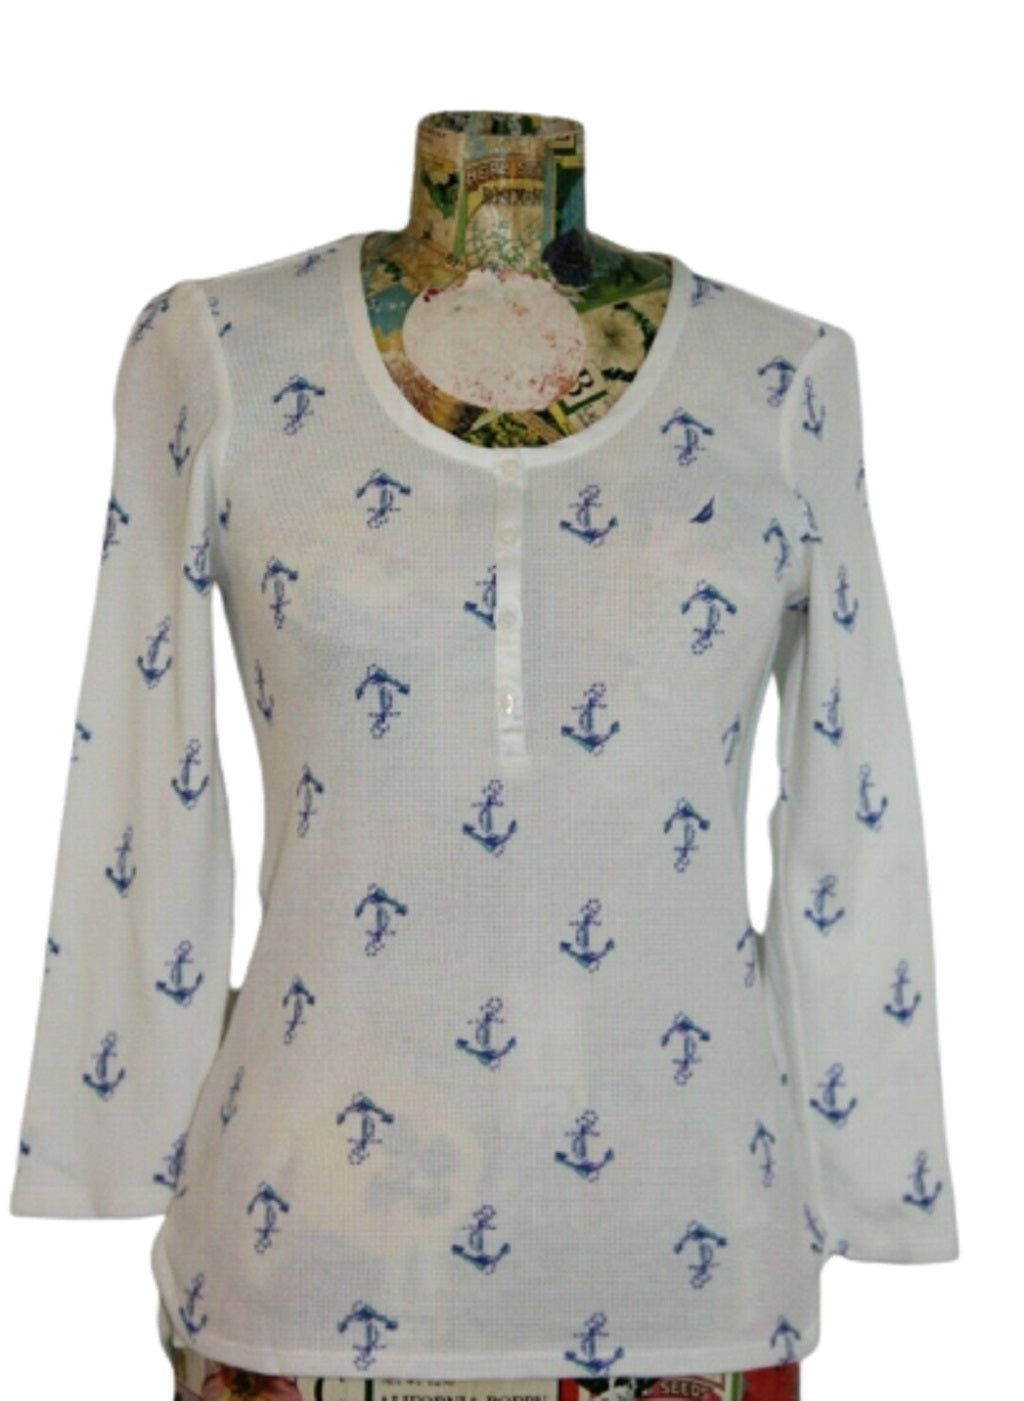 Nautica Womens Anchors Print Thermal Sleepwear Top